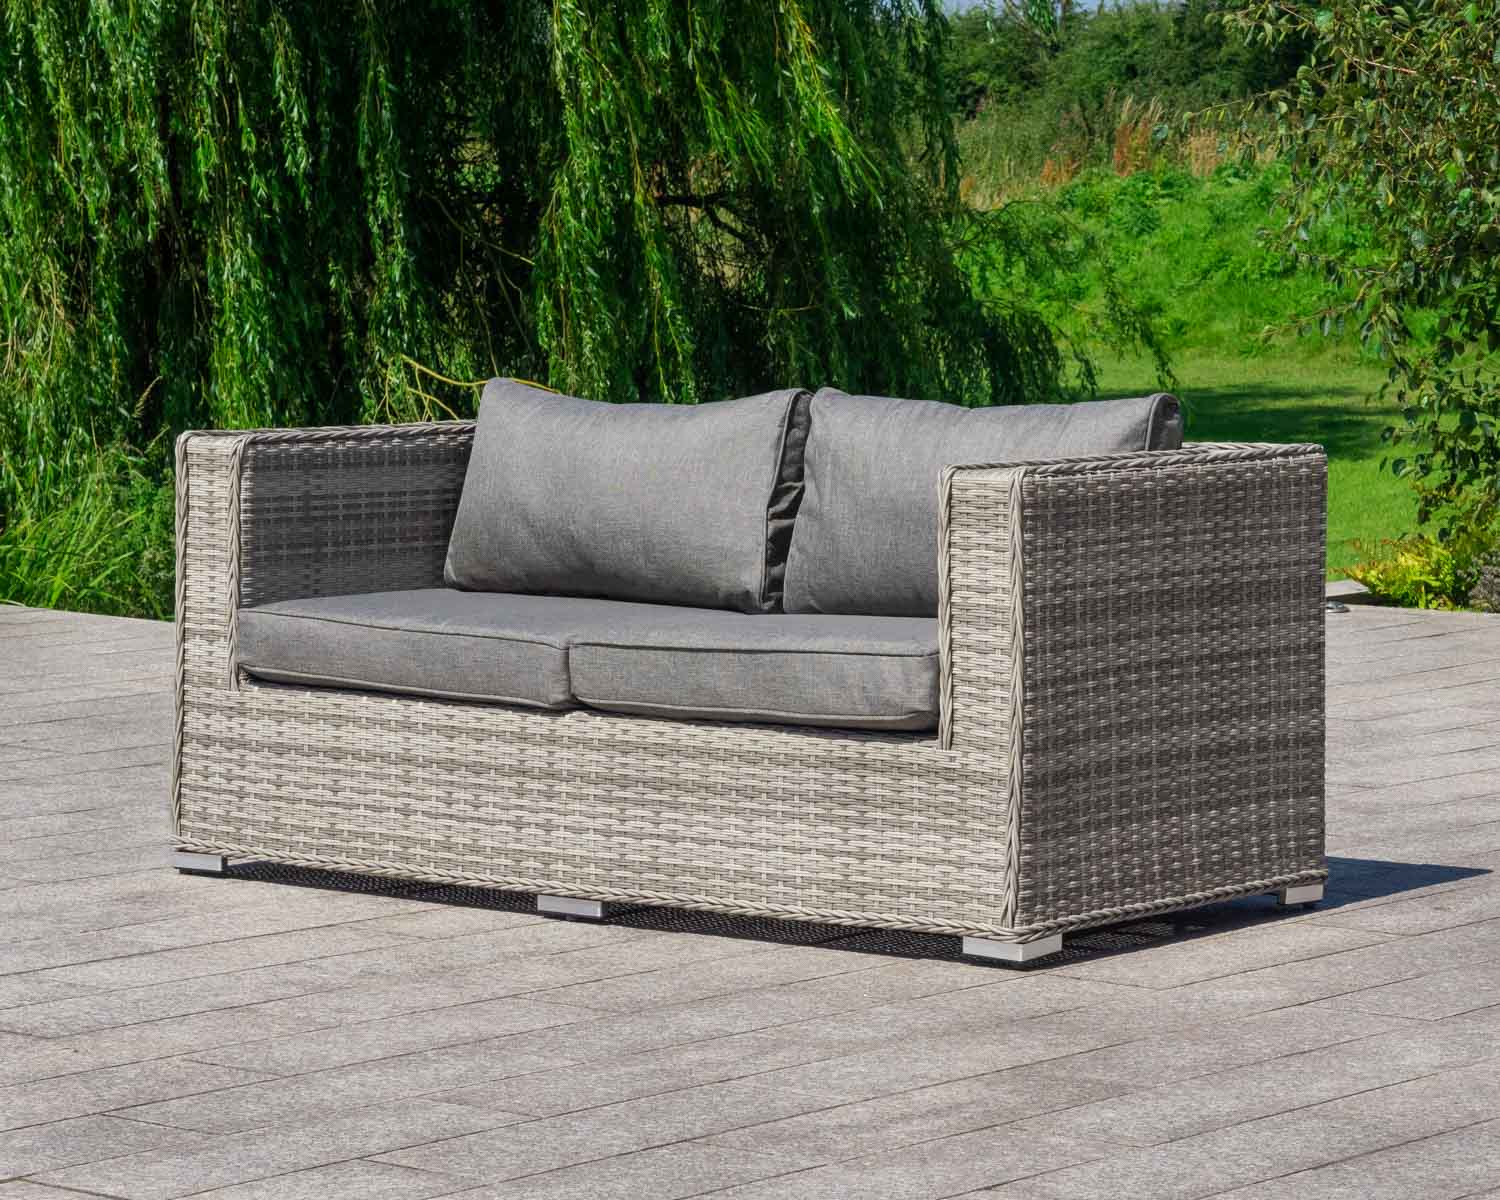 2 Seater Rattan Garden Sofa in Grey - Ascot - Rattan Direct